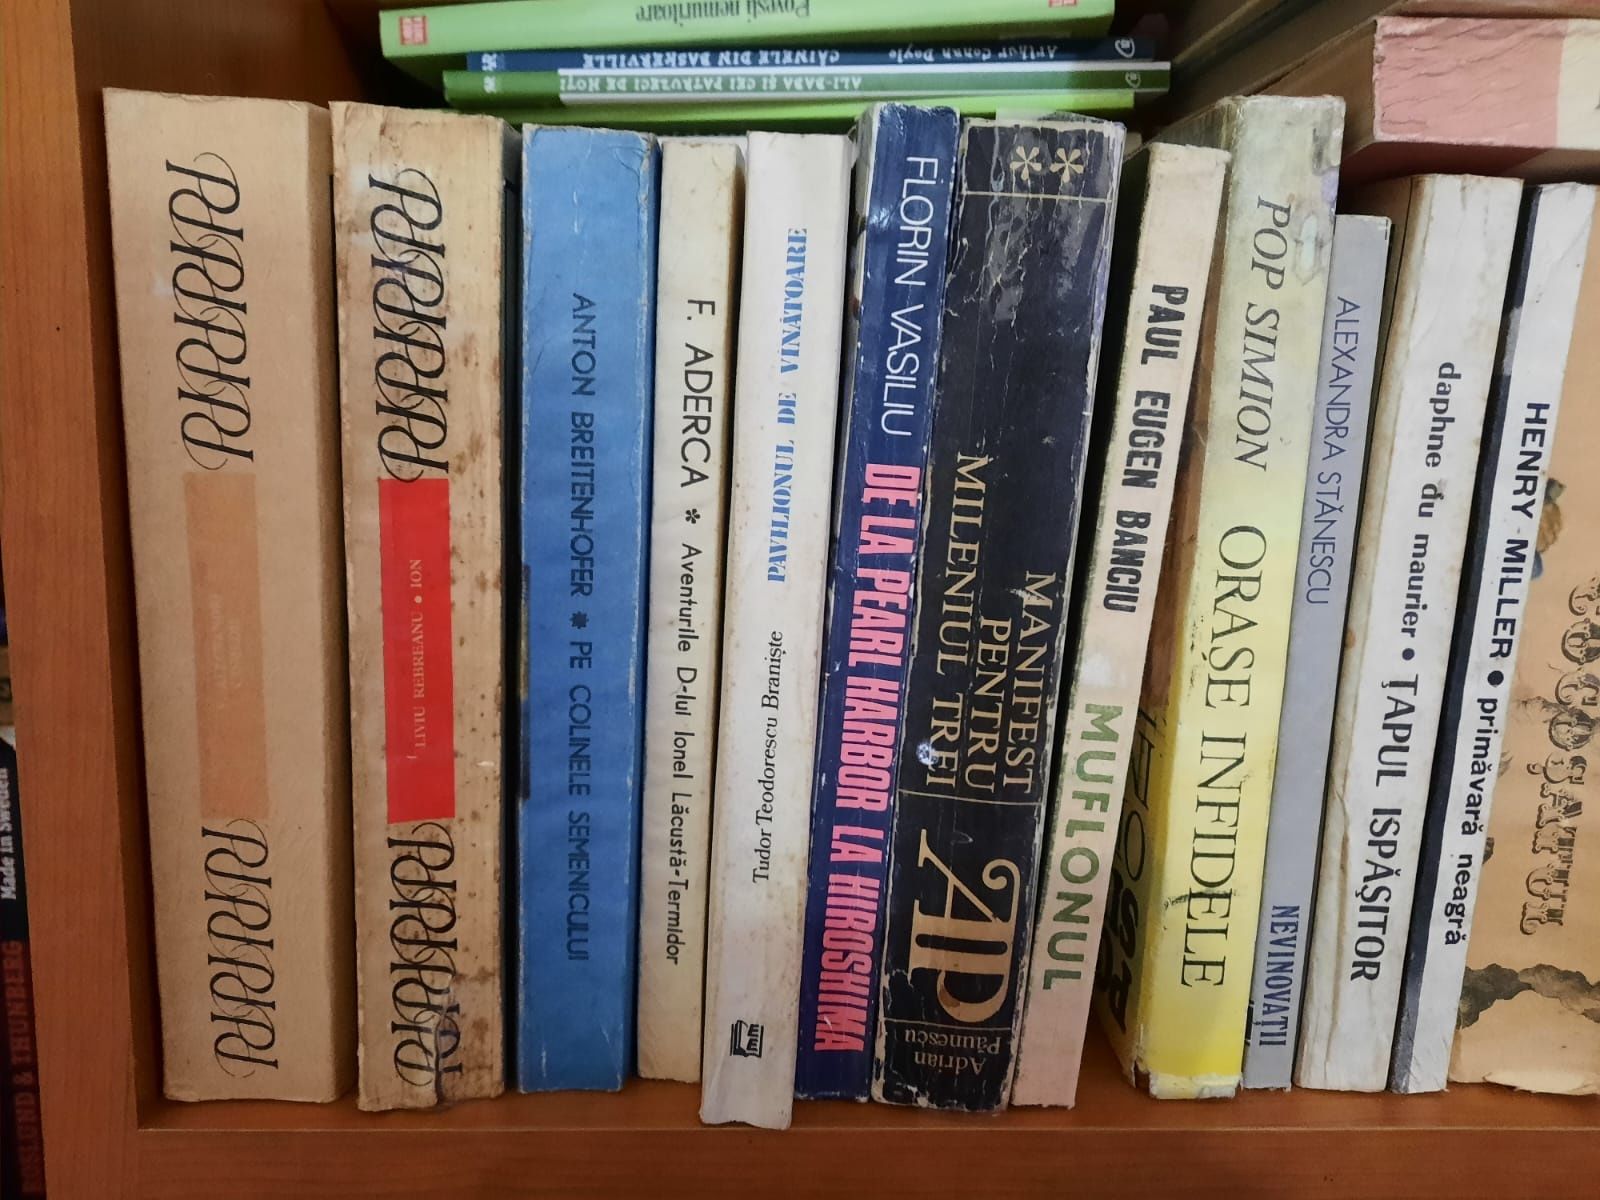 Carti vechi in stare buna